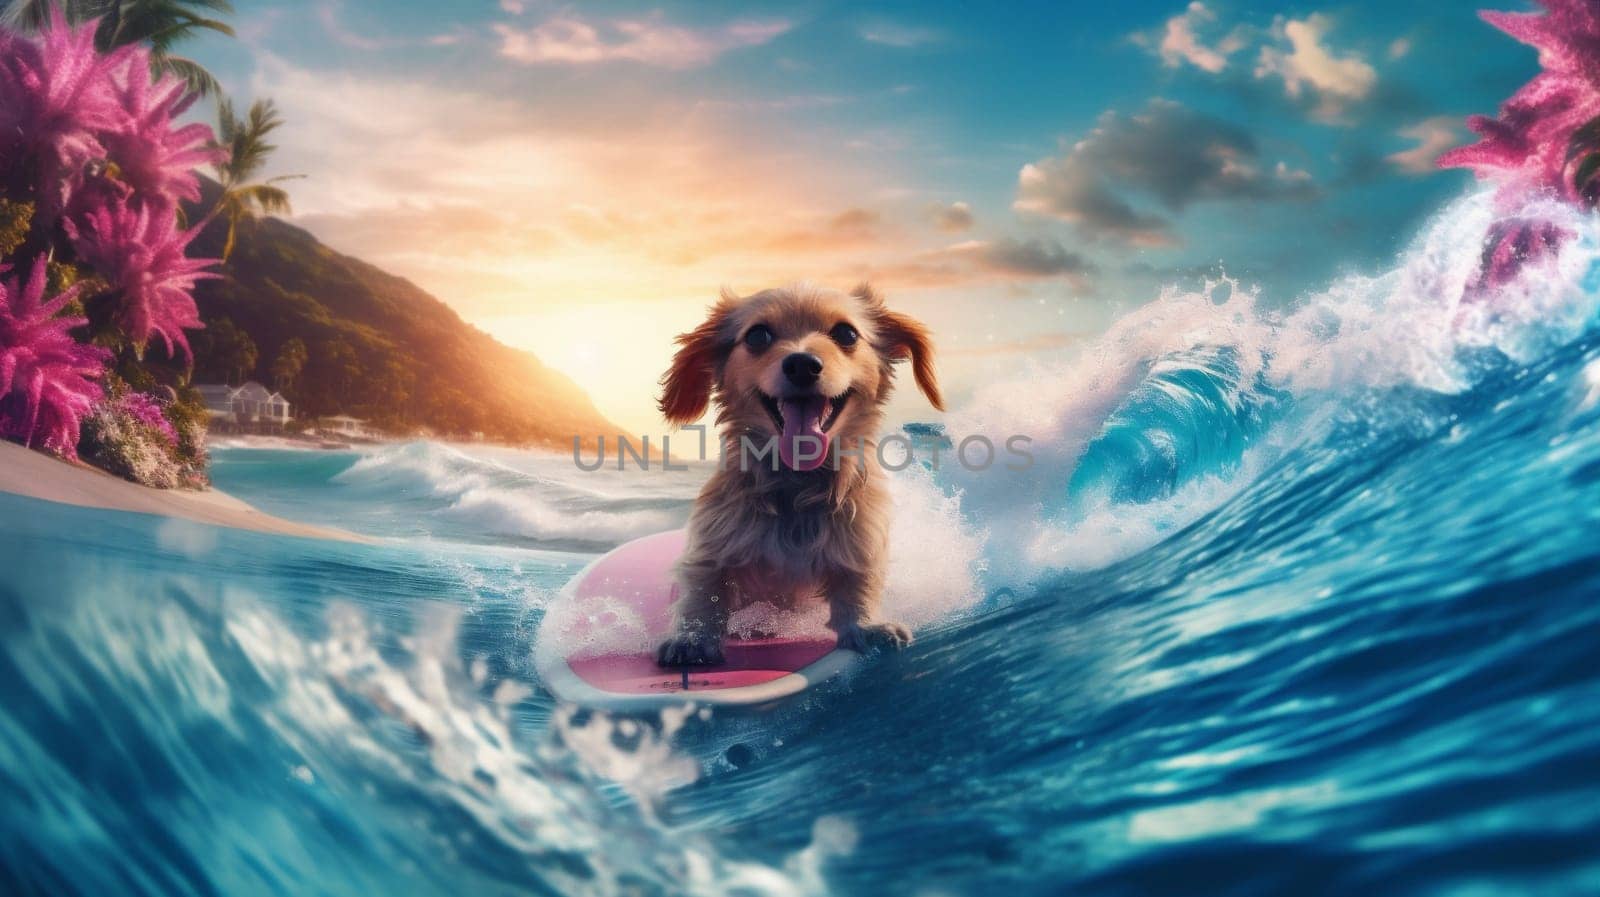 dog pet power puppy surfboard surfer animal beach tropical funny sun wave fun labrador summer hawaii humor hawaiian ocean vacation. Generative AI.